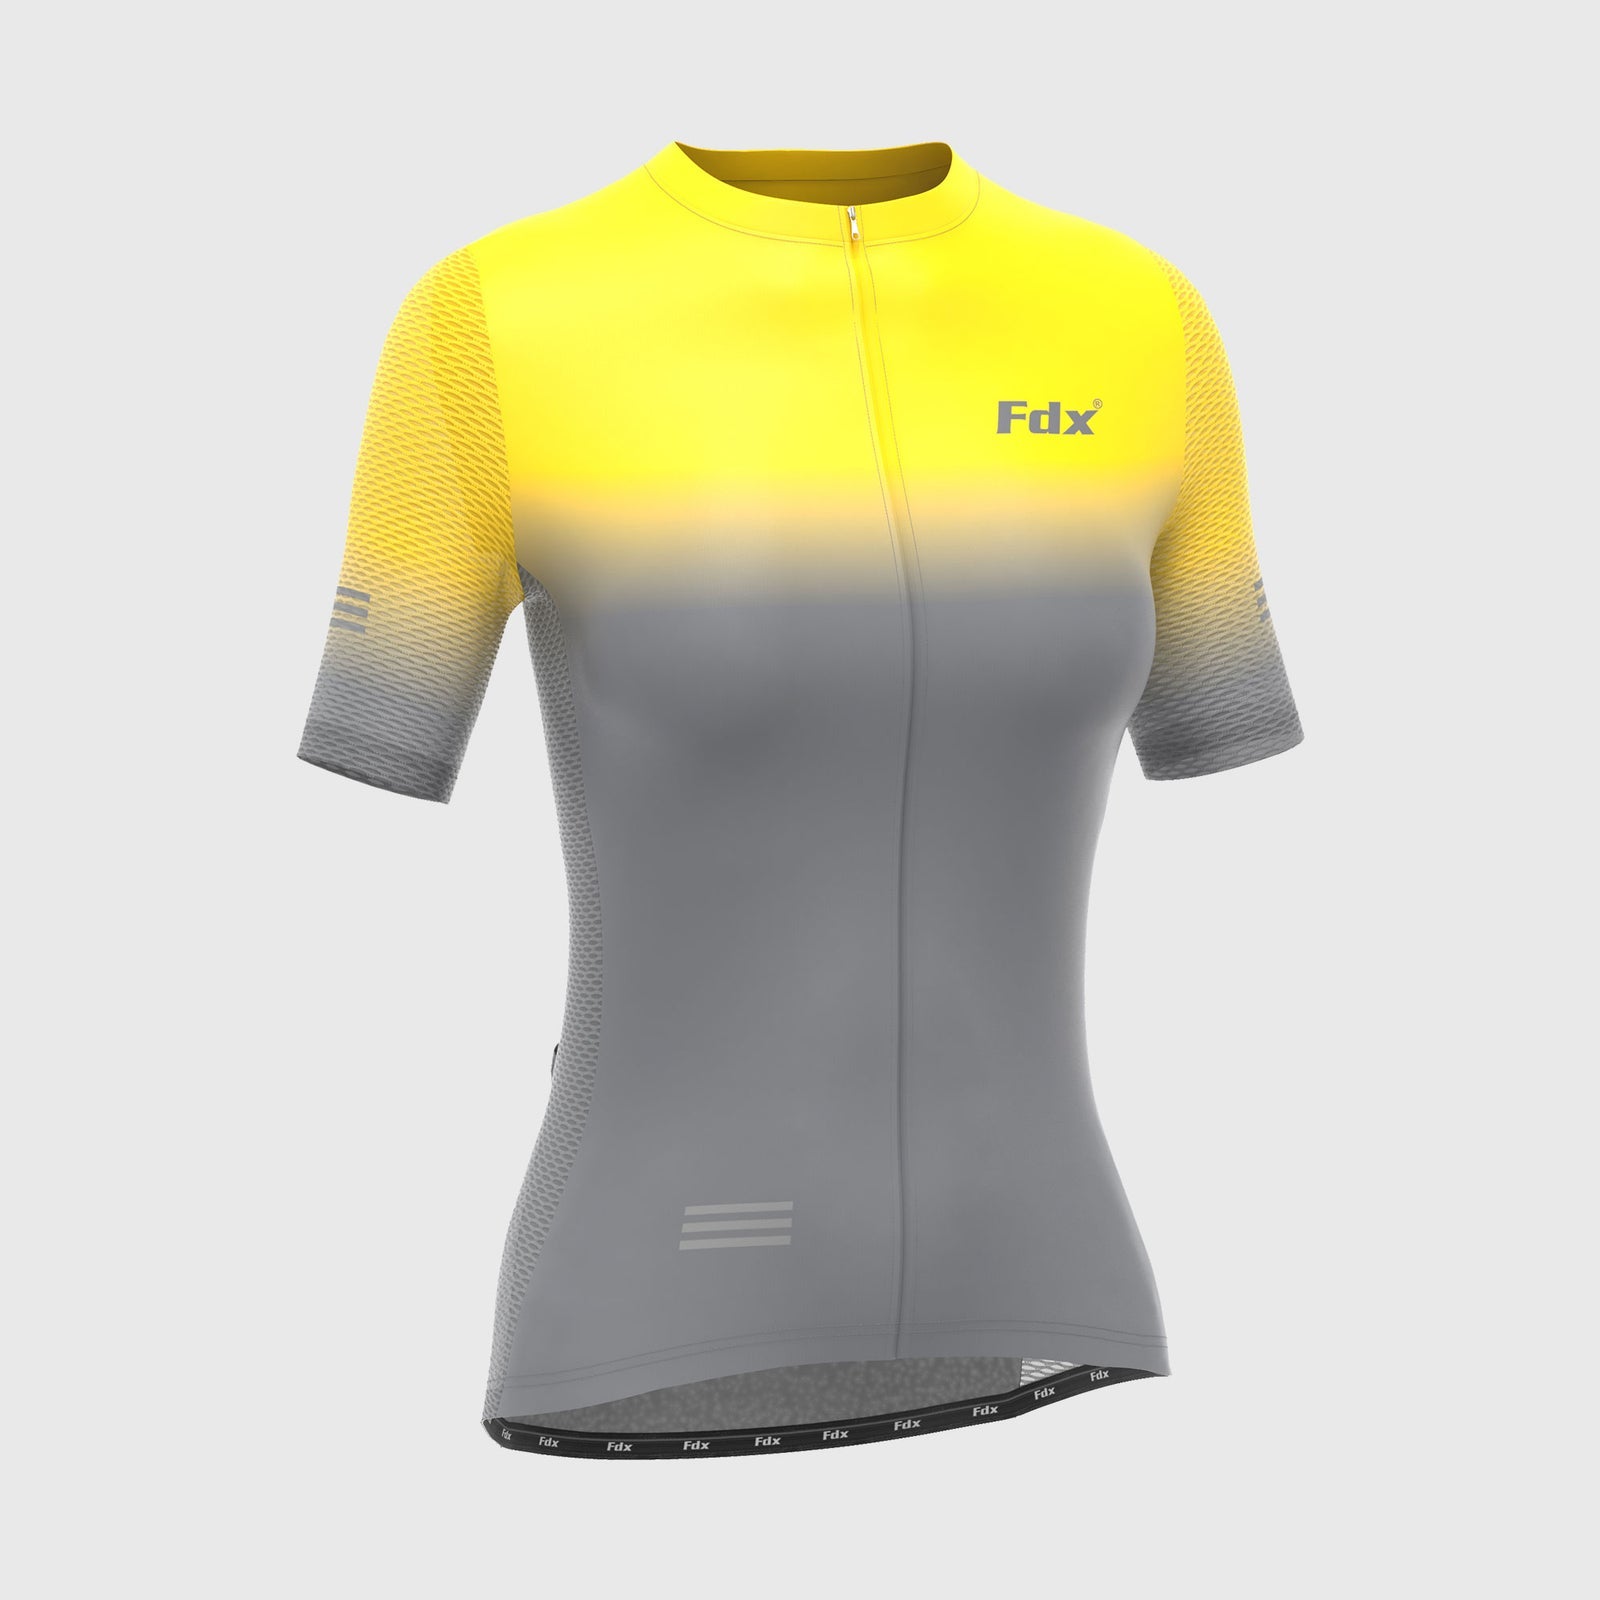 Fdx Womens Yellow & Grey Short Sleeve Cycling Jersey for Summer Best Road Bike Wear Top Light Weight, Full Zipper, Pockets & Hi-viz Reflectors - Duo